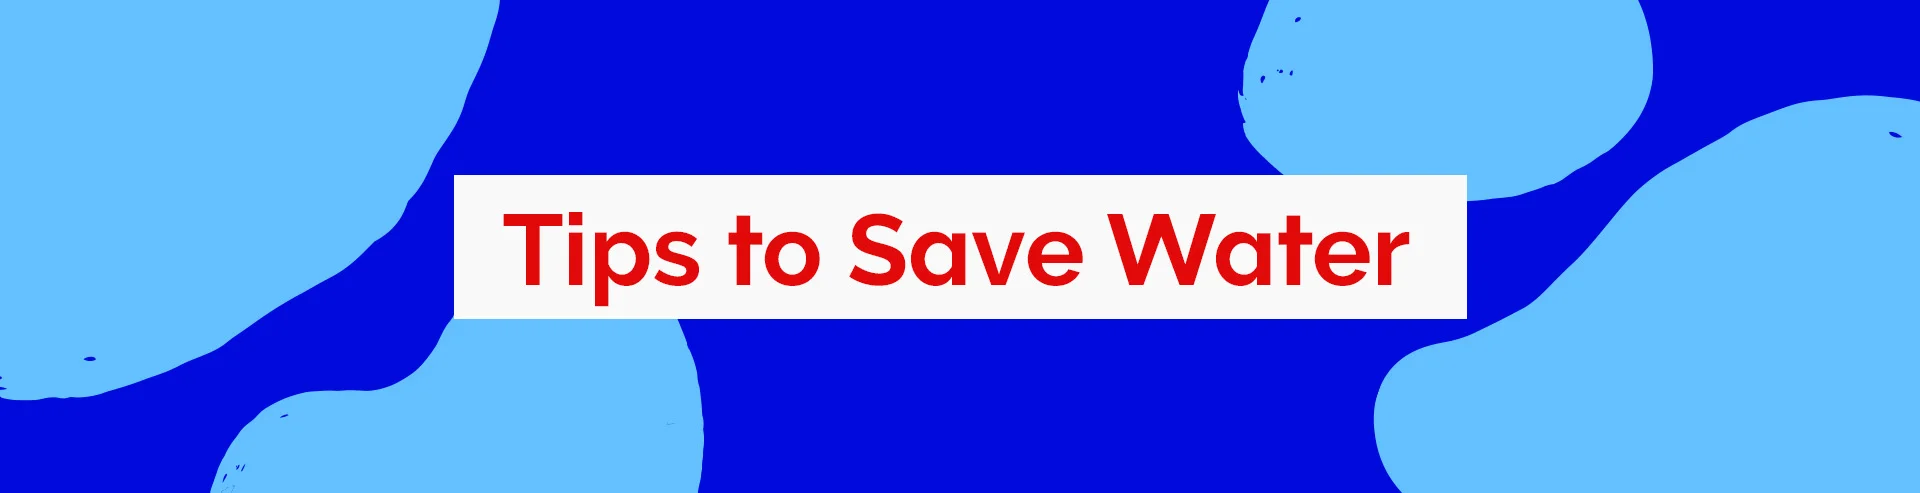 Full-Width-Gift-Idea-Save-Water-Desktop.webp